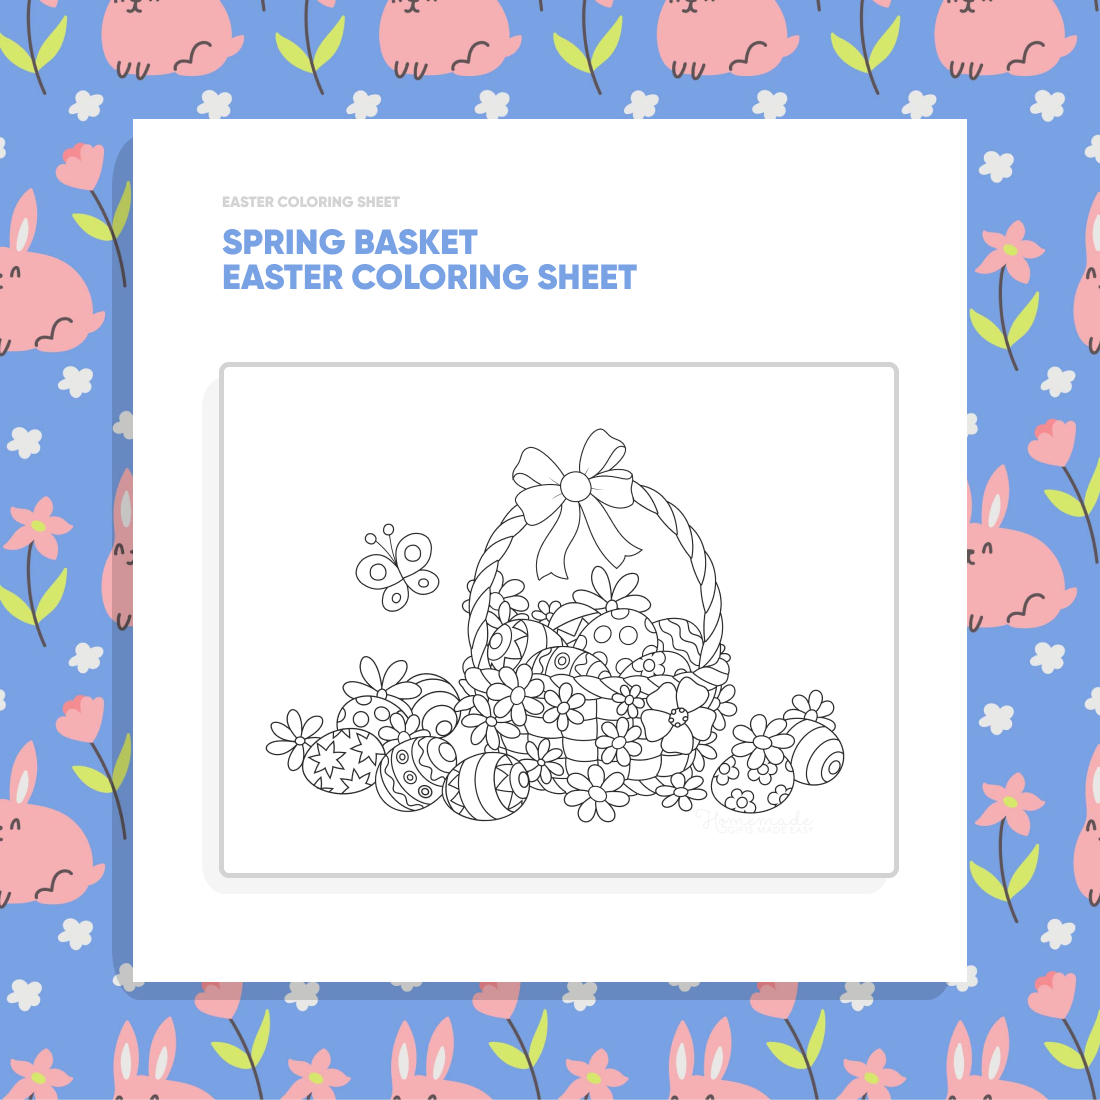 Spring Basket Easter Coloring Sheet cover image.